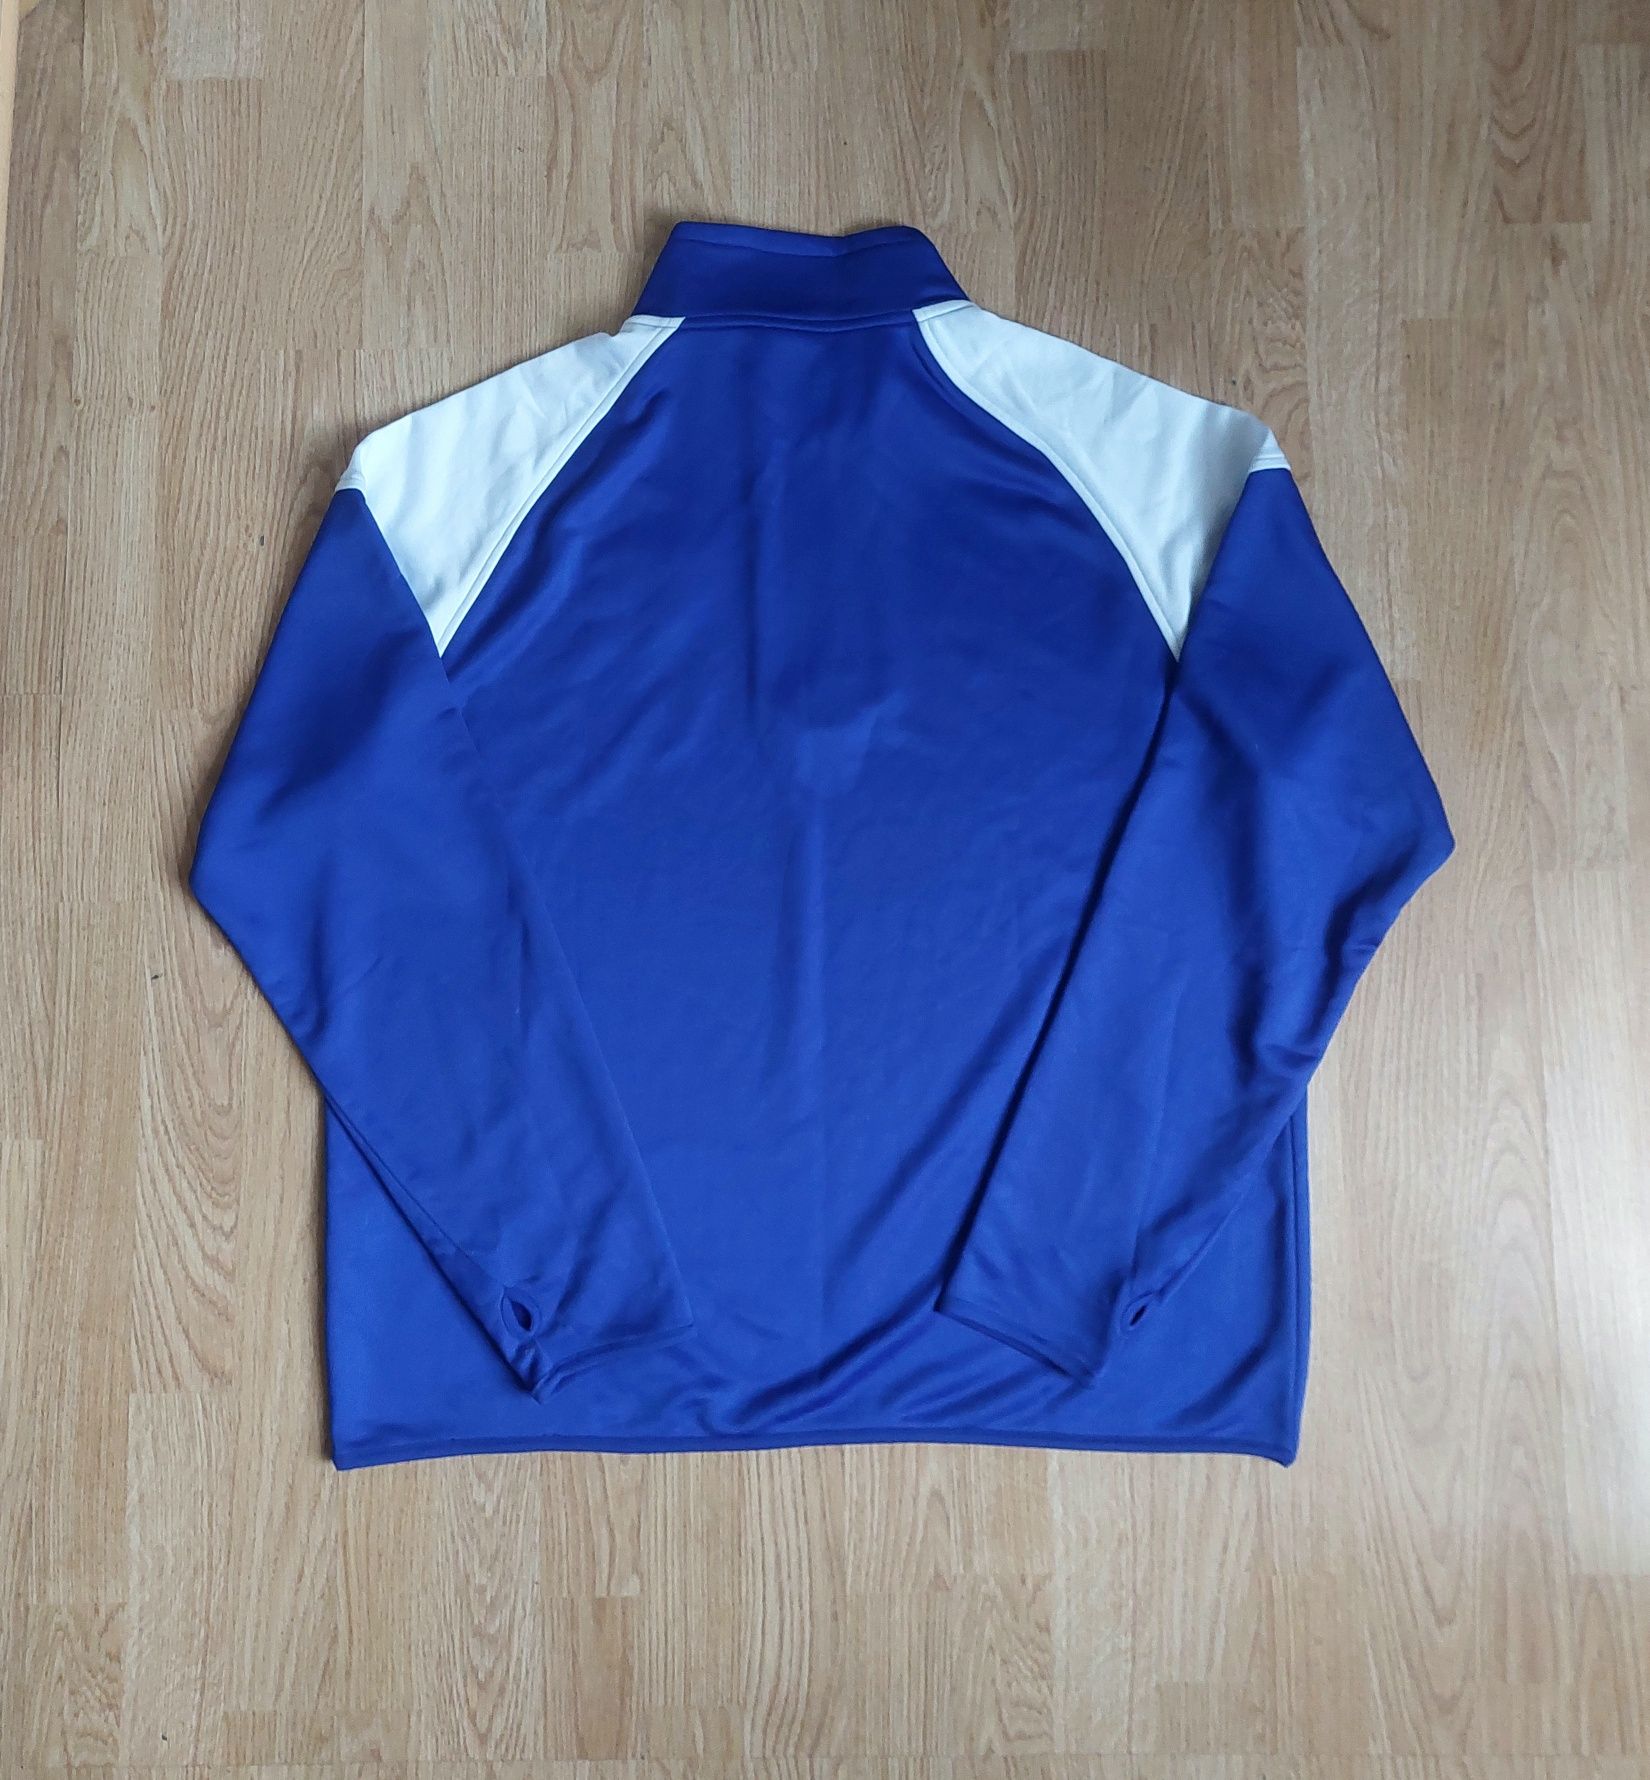 Bluza piłkarska Everton F.C 10/11 r. XL